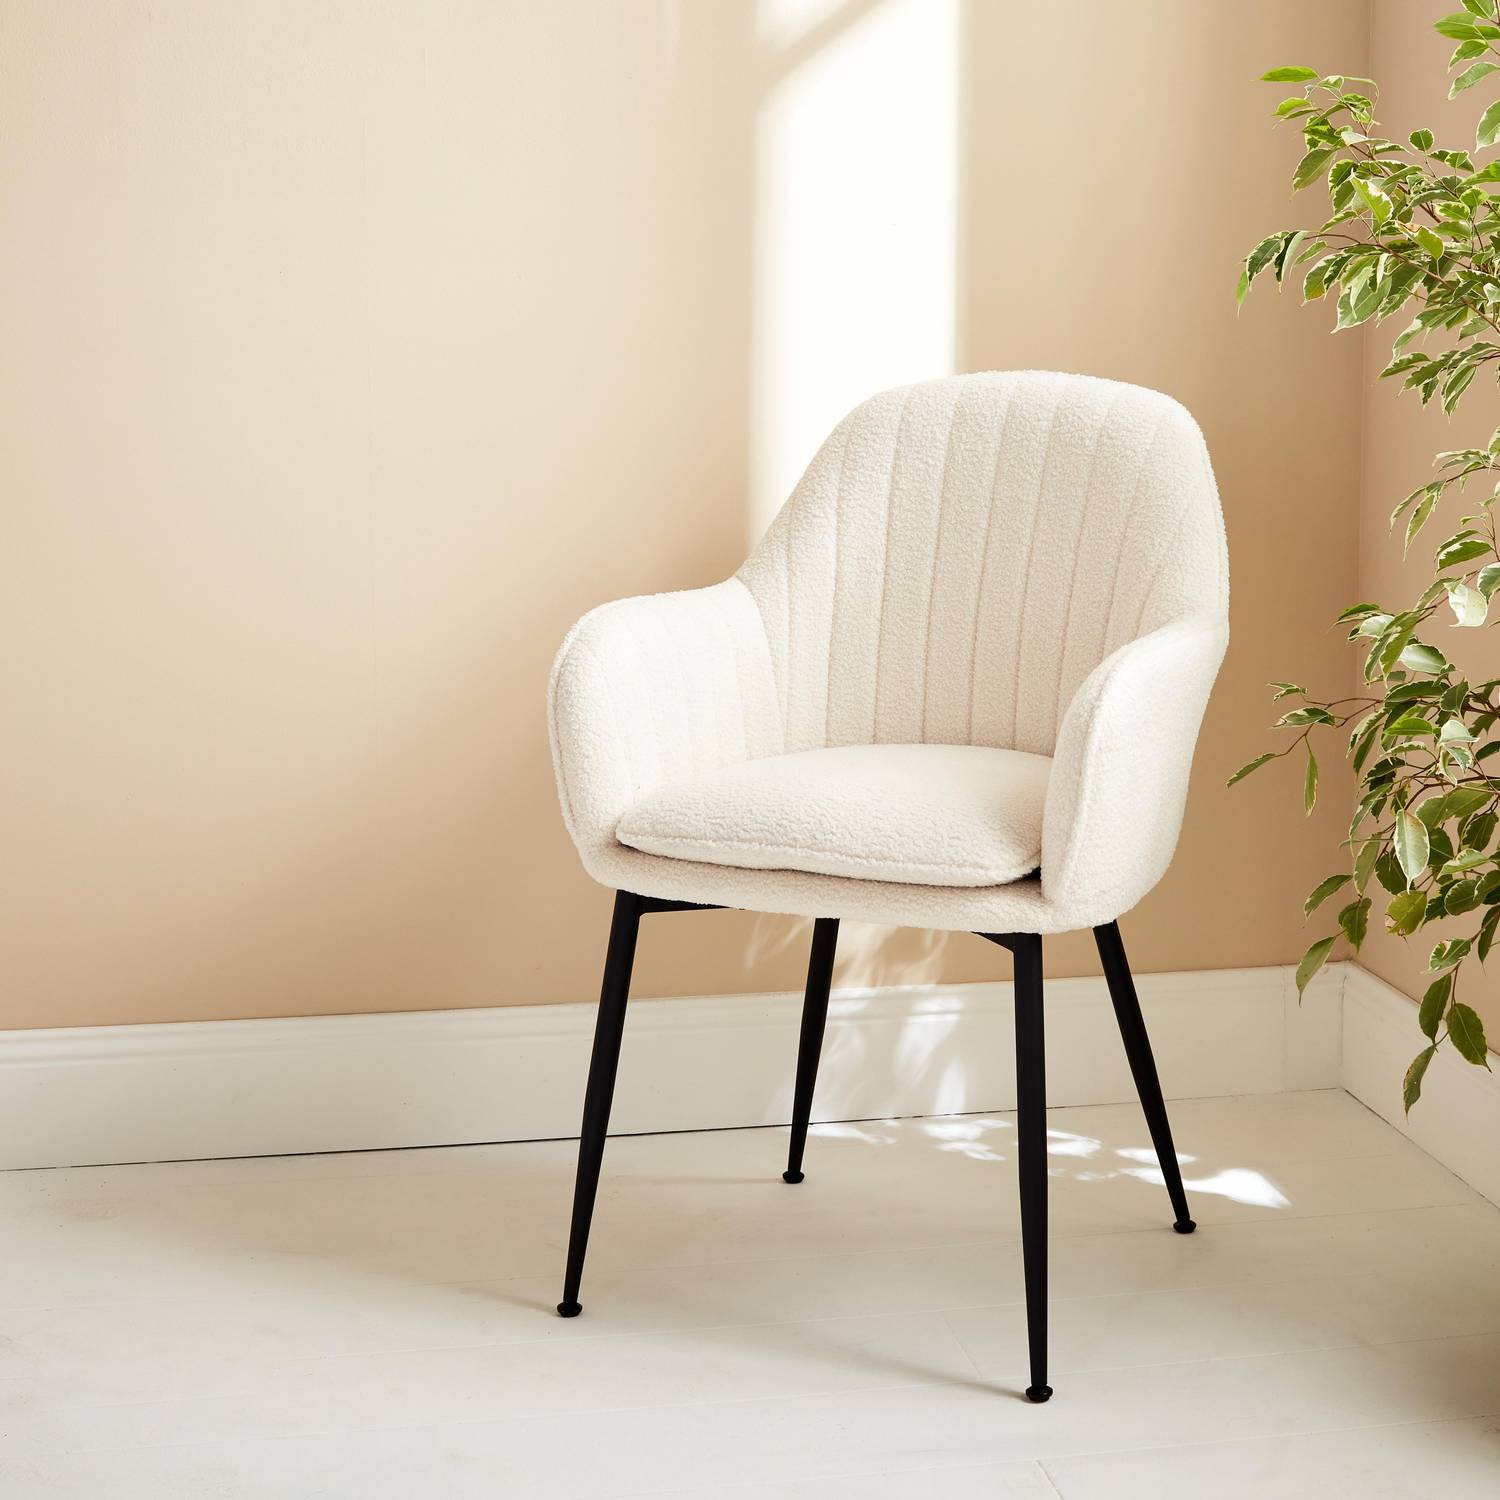 Boucle armchair with metal legs, 58x58x85cm - Shella Boucle - White Photo1